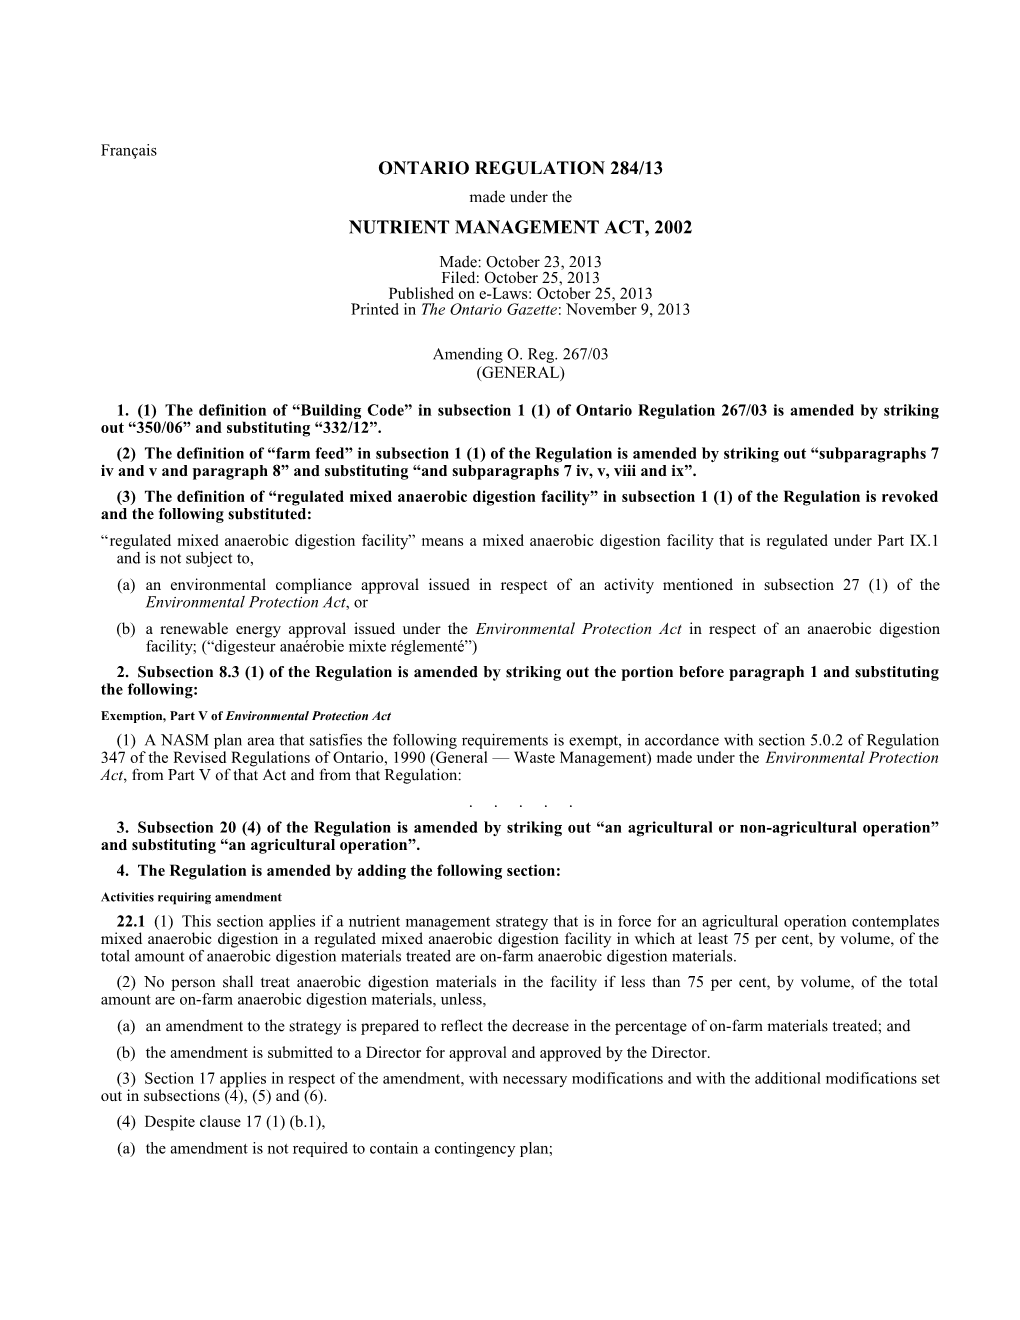 NUTRIENT MANAGEMENT ACT, 2002 - O. Reg. 284/13